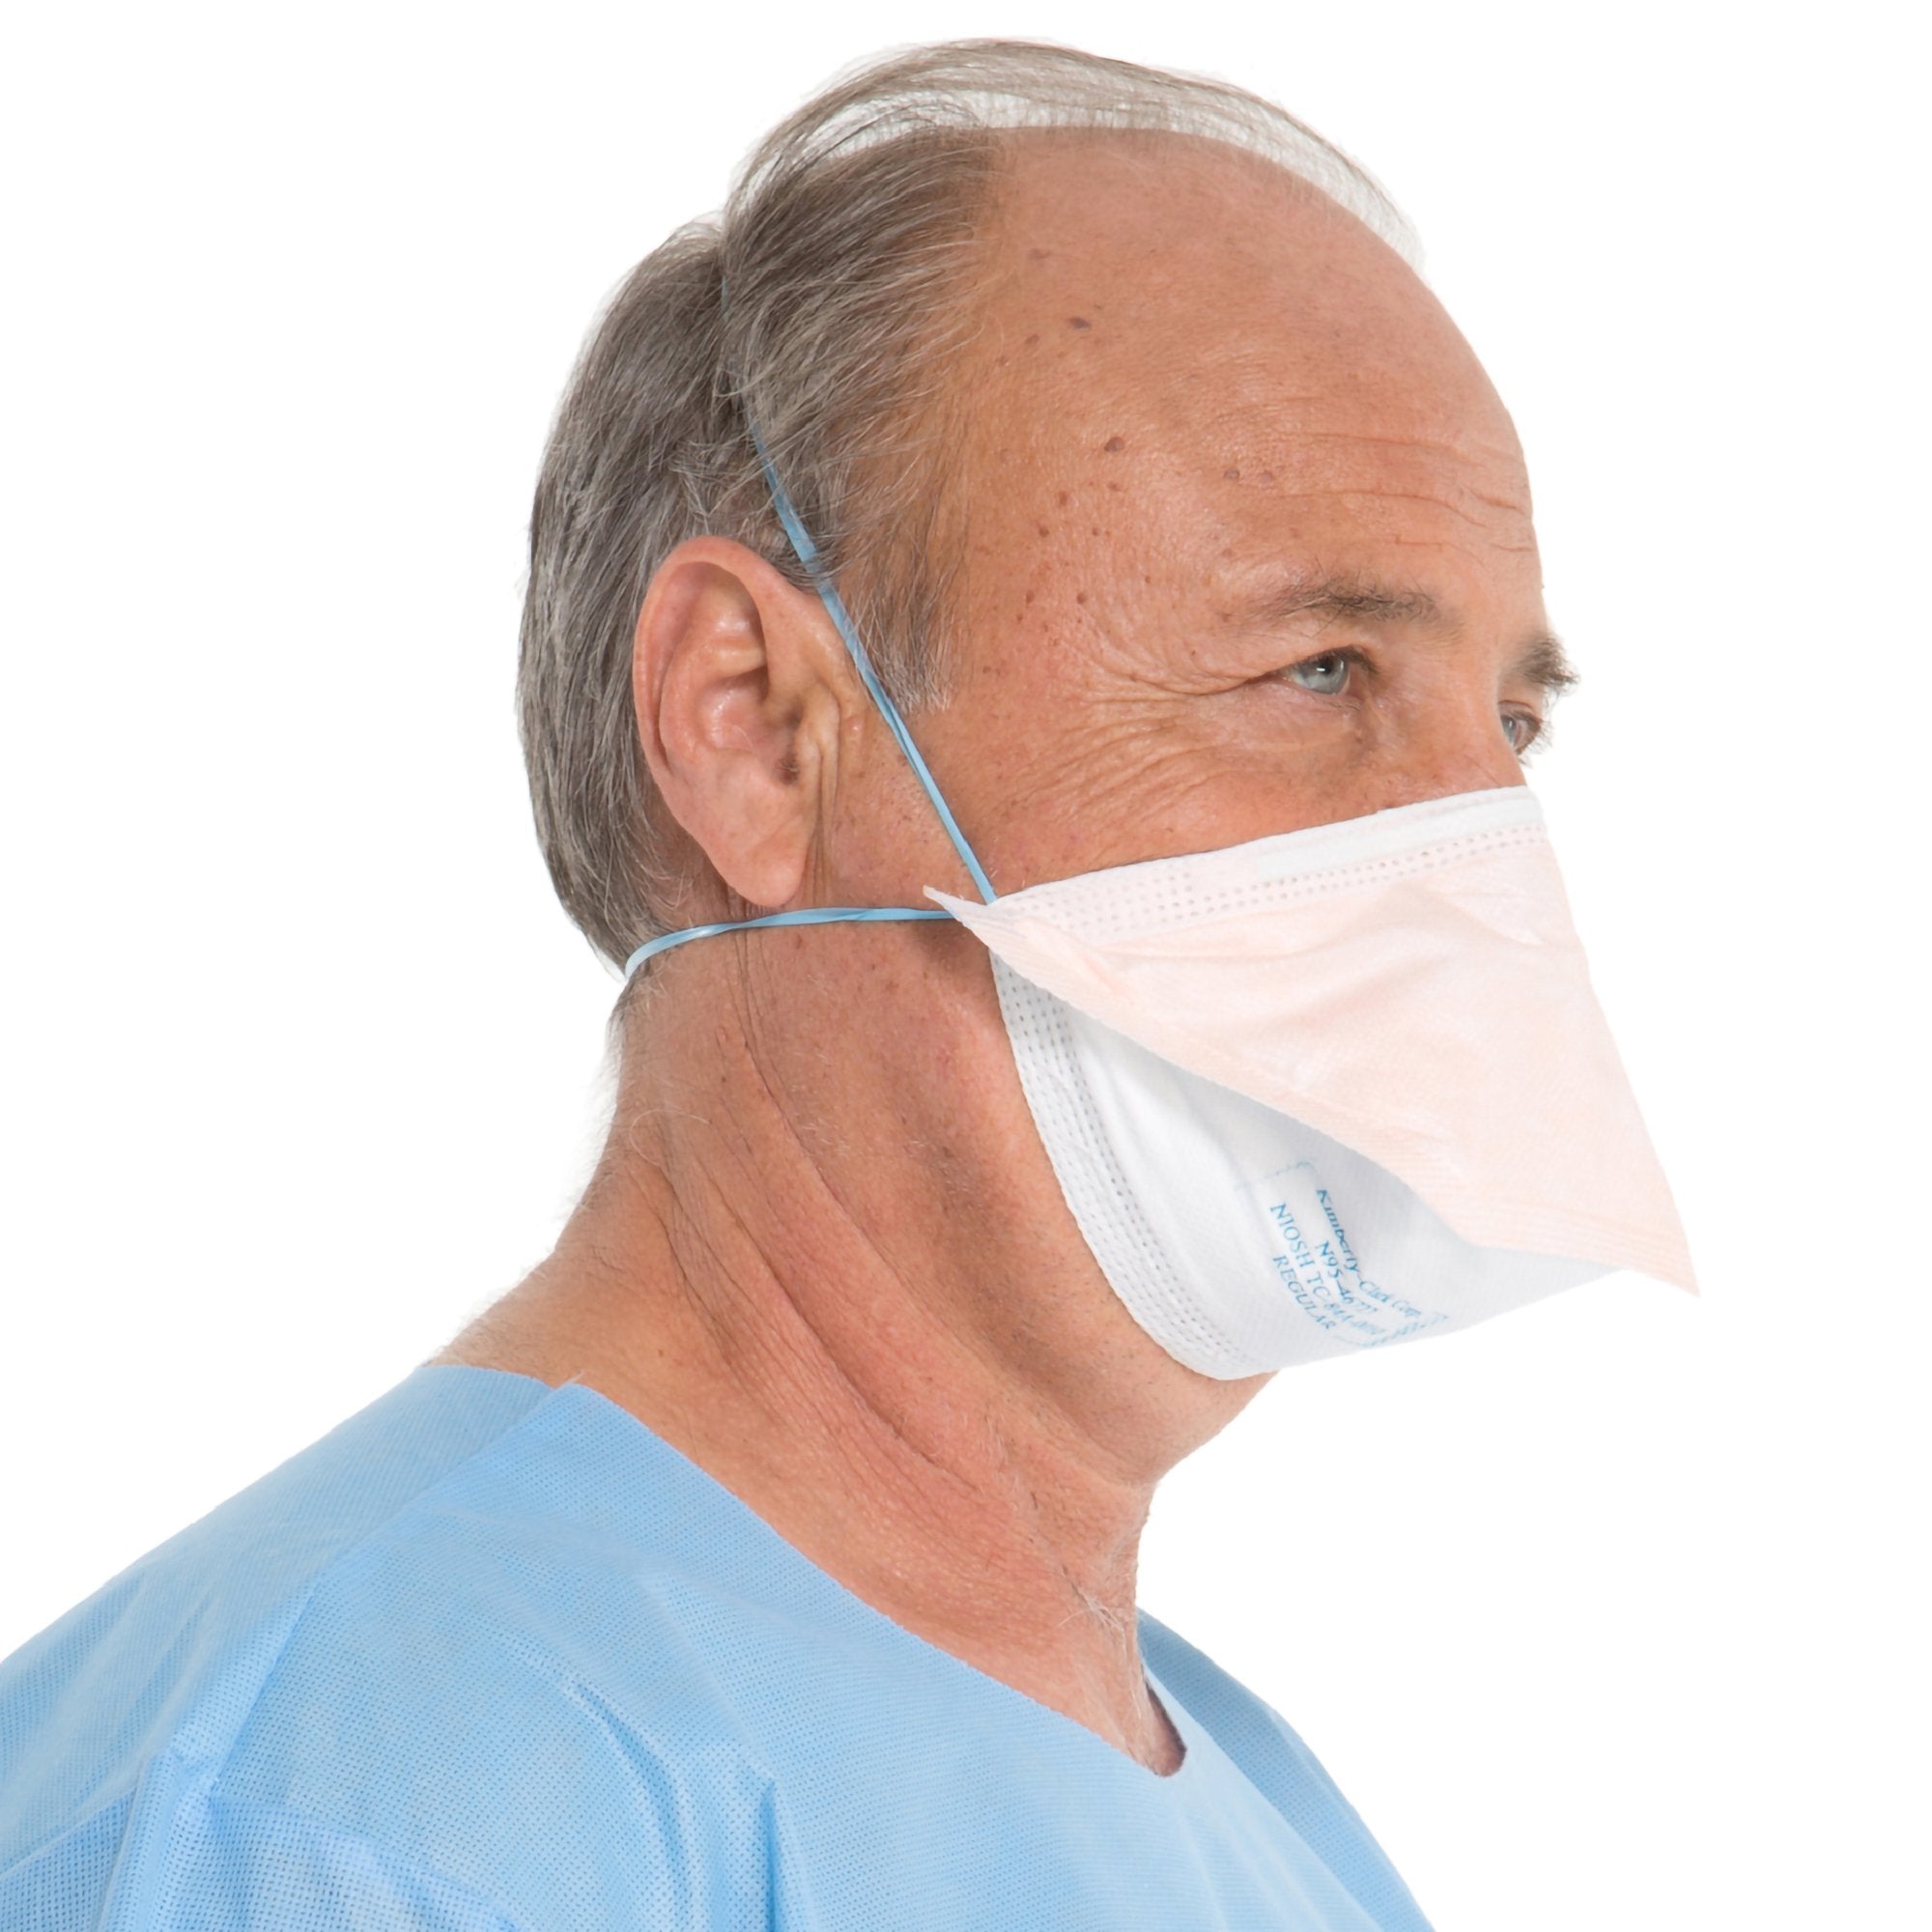 Particulate Respirator / Surgical Mask FluidShield Medical N95 Flat Fold Elastic Strap One Size Fits Most Orange NonSterile ASTM Level 3 Adult